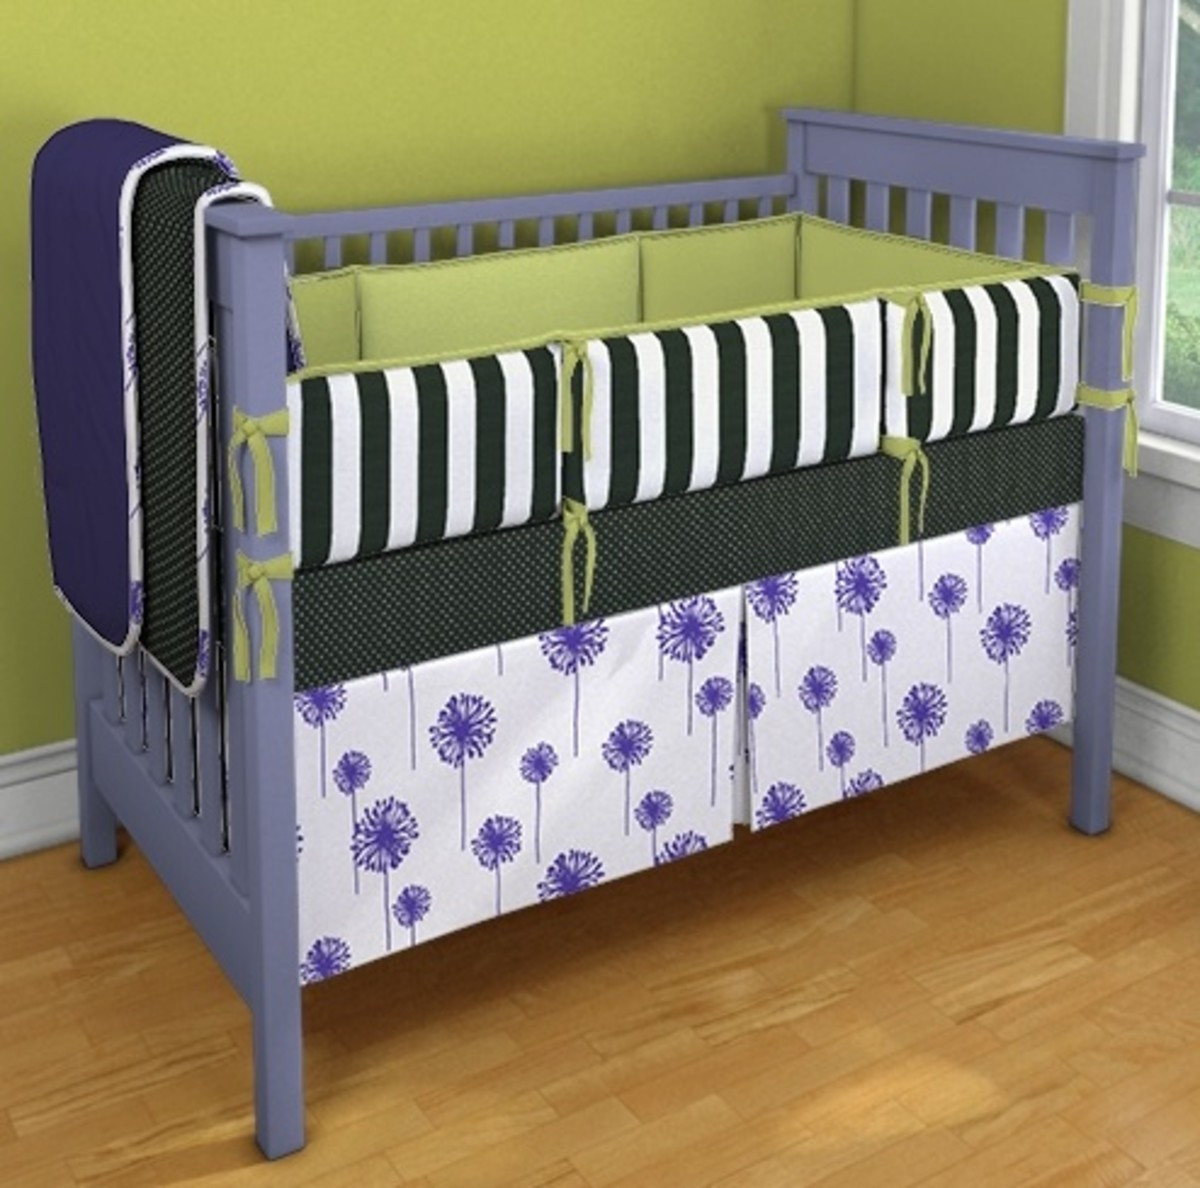 Best ideas about DIY Crib Bedding
. Save or Pin DIY Design for Nursery Bedding MomTrendsMomTrends Now.